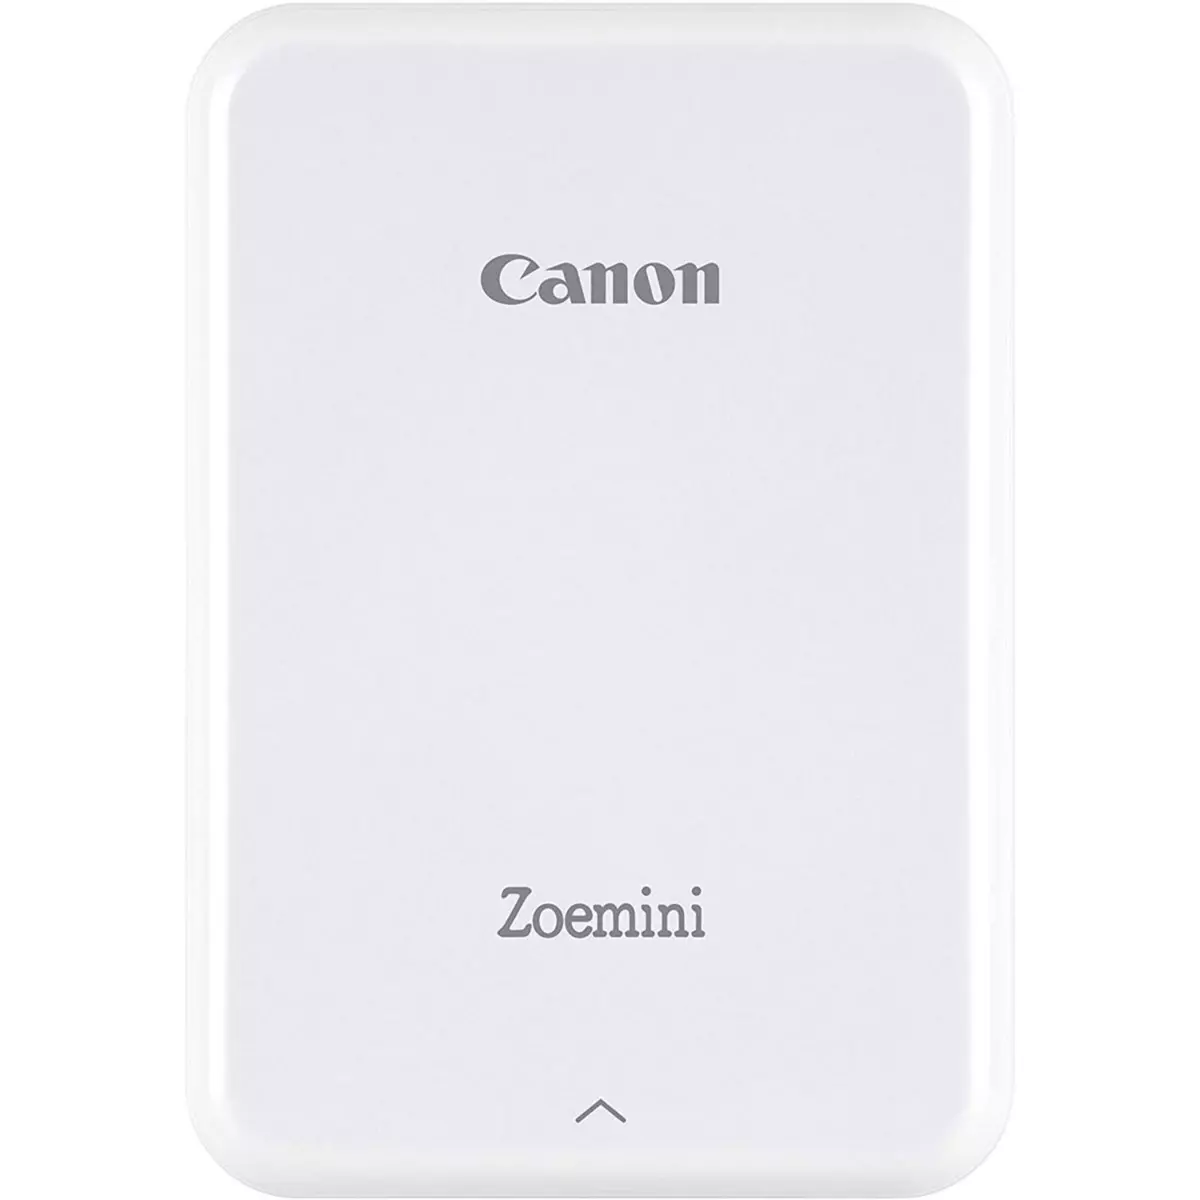 CANON Pack imprimante photo portable ZOEMINI blanche + housse + 50 feuilles